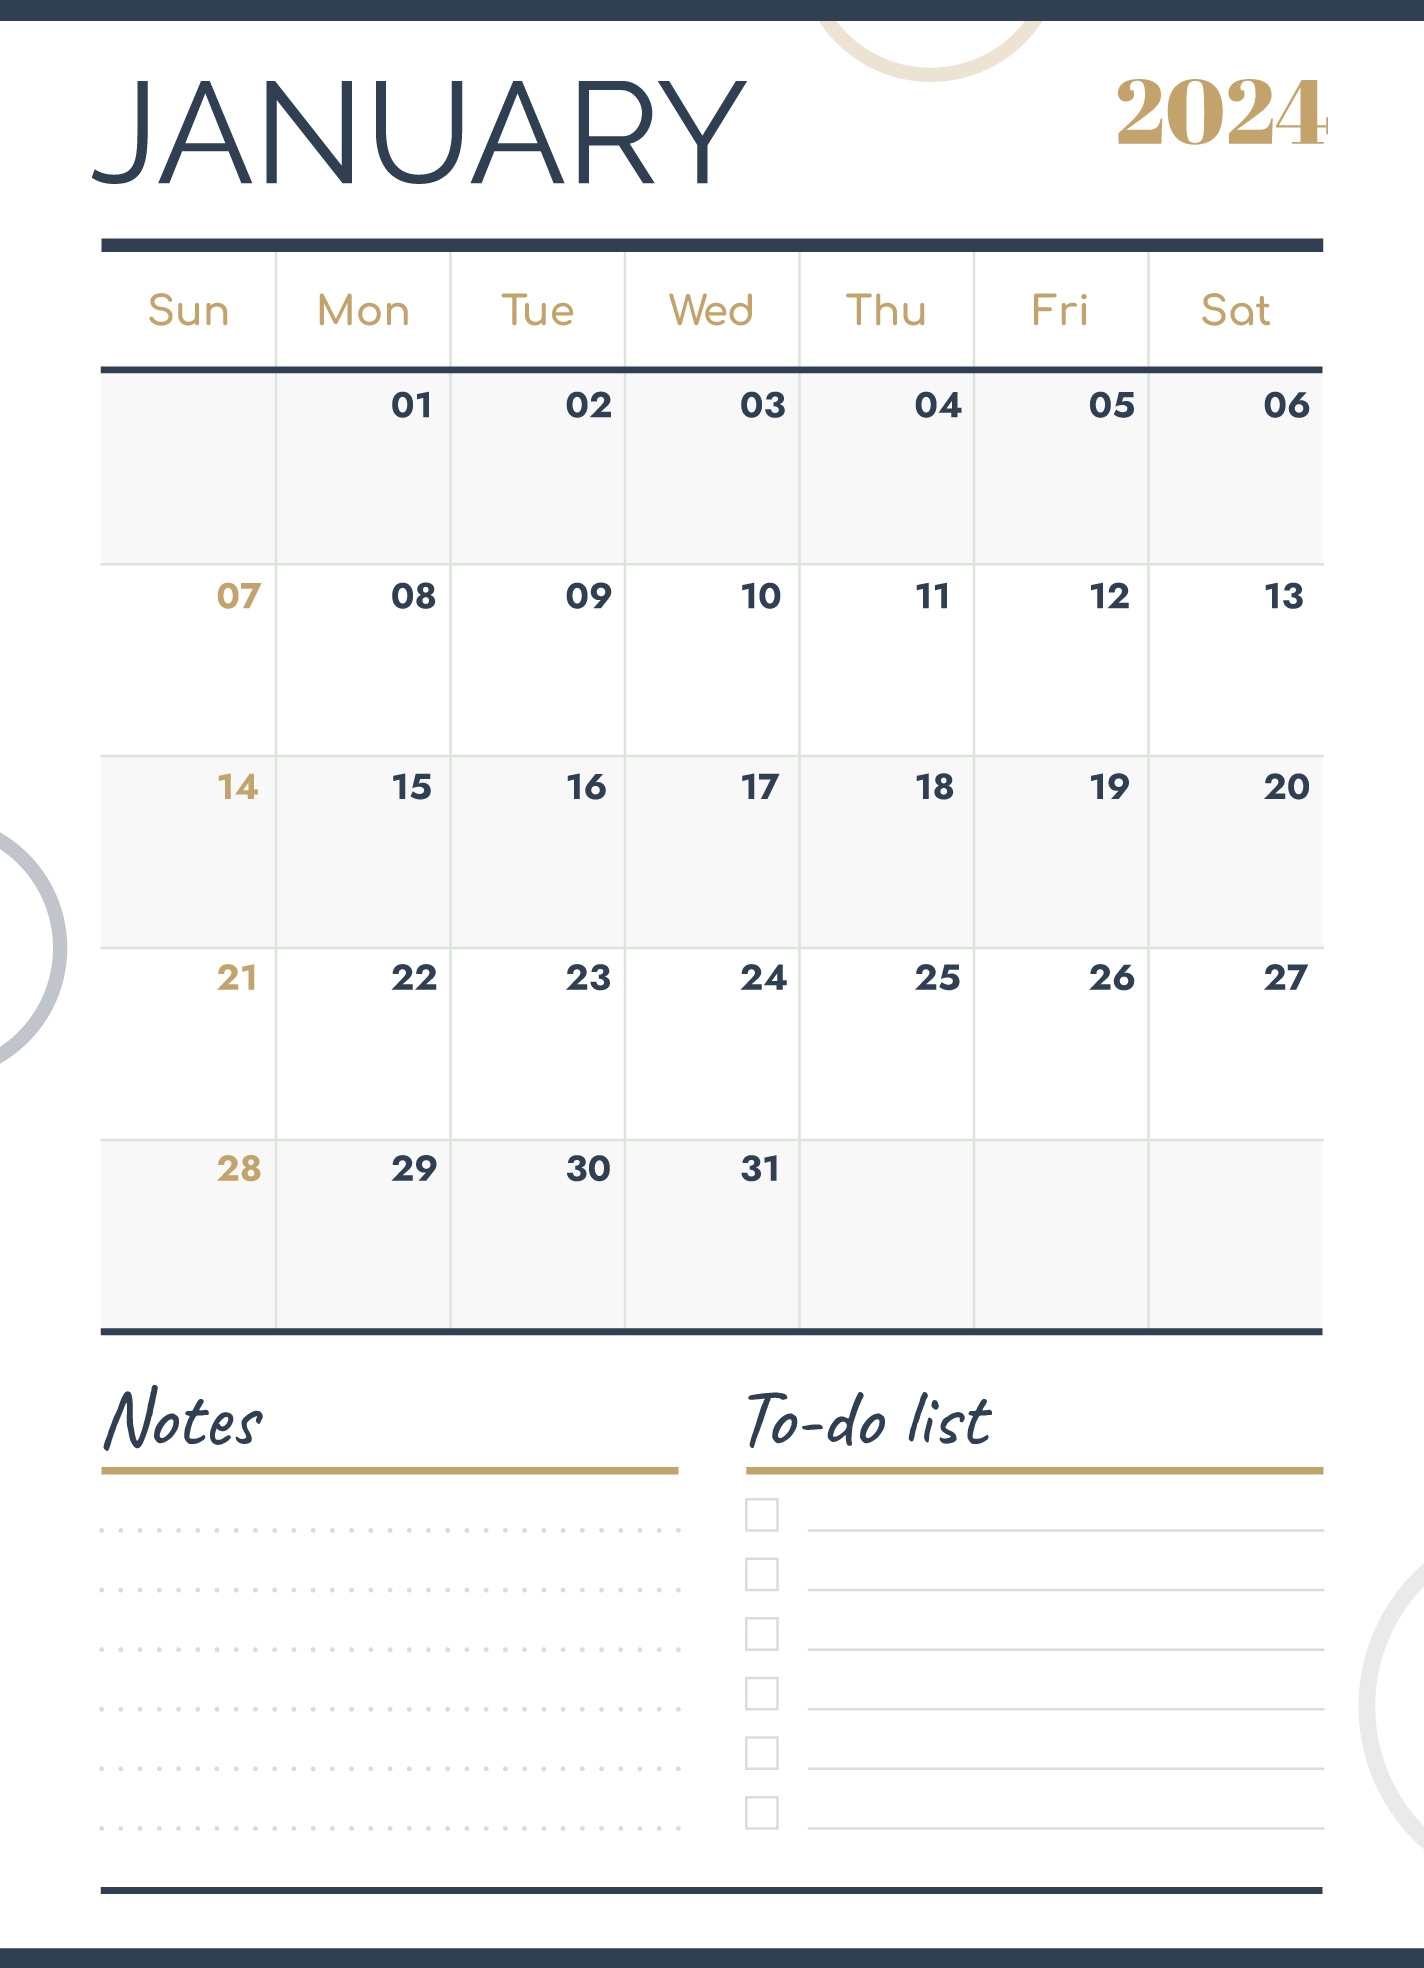 January 2024 Calendar Free Google Docs Template - Gdoc.io | Google Calendar 2024 Printable